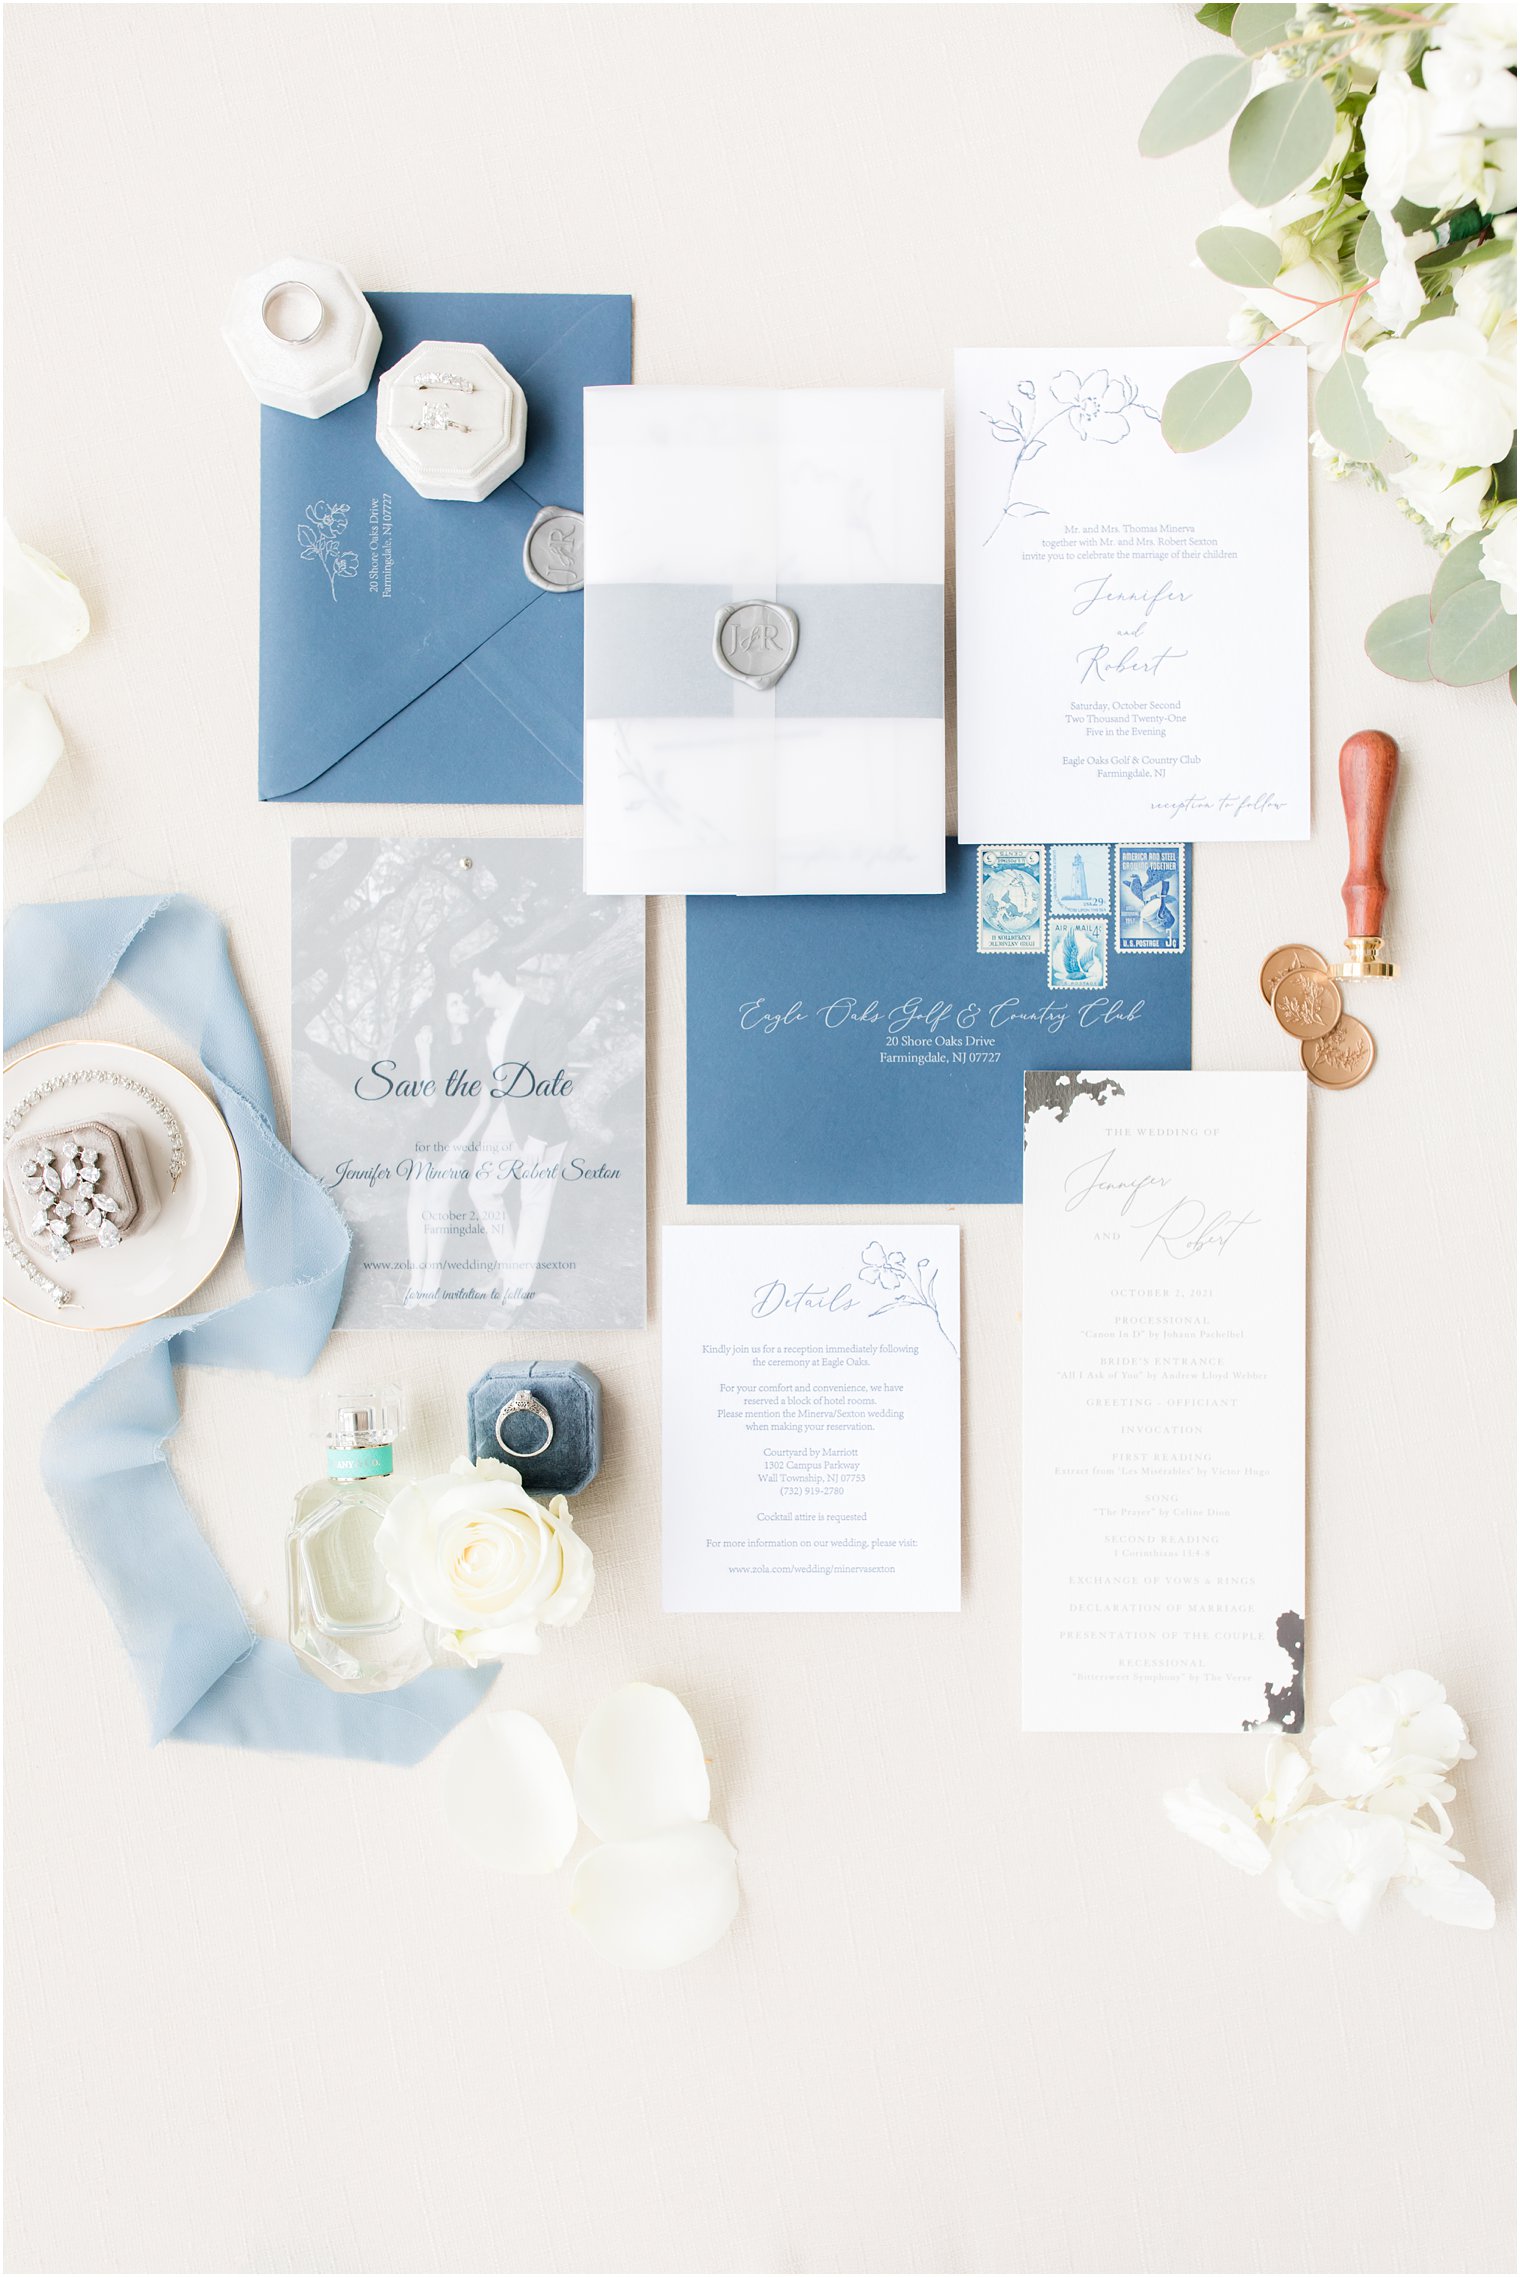 custom pale blue and silver wedding invites for Farmingdale NJ wedding